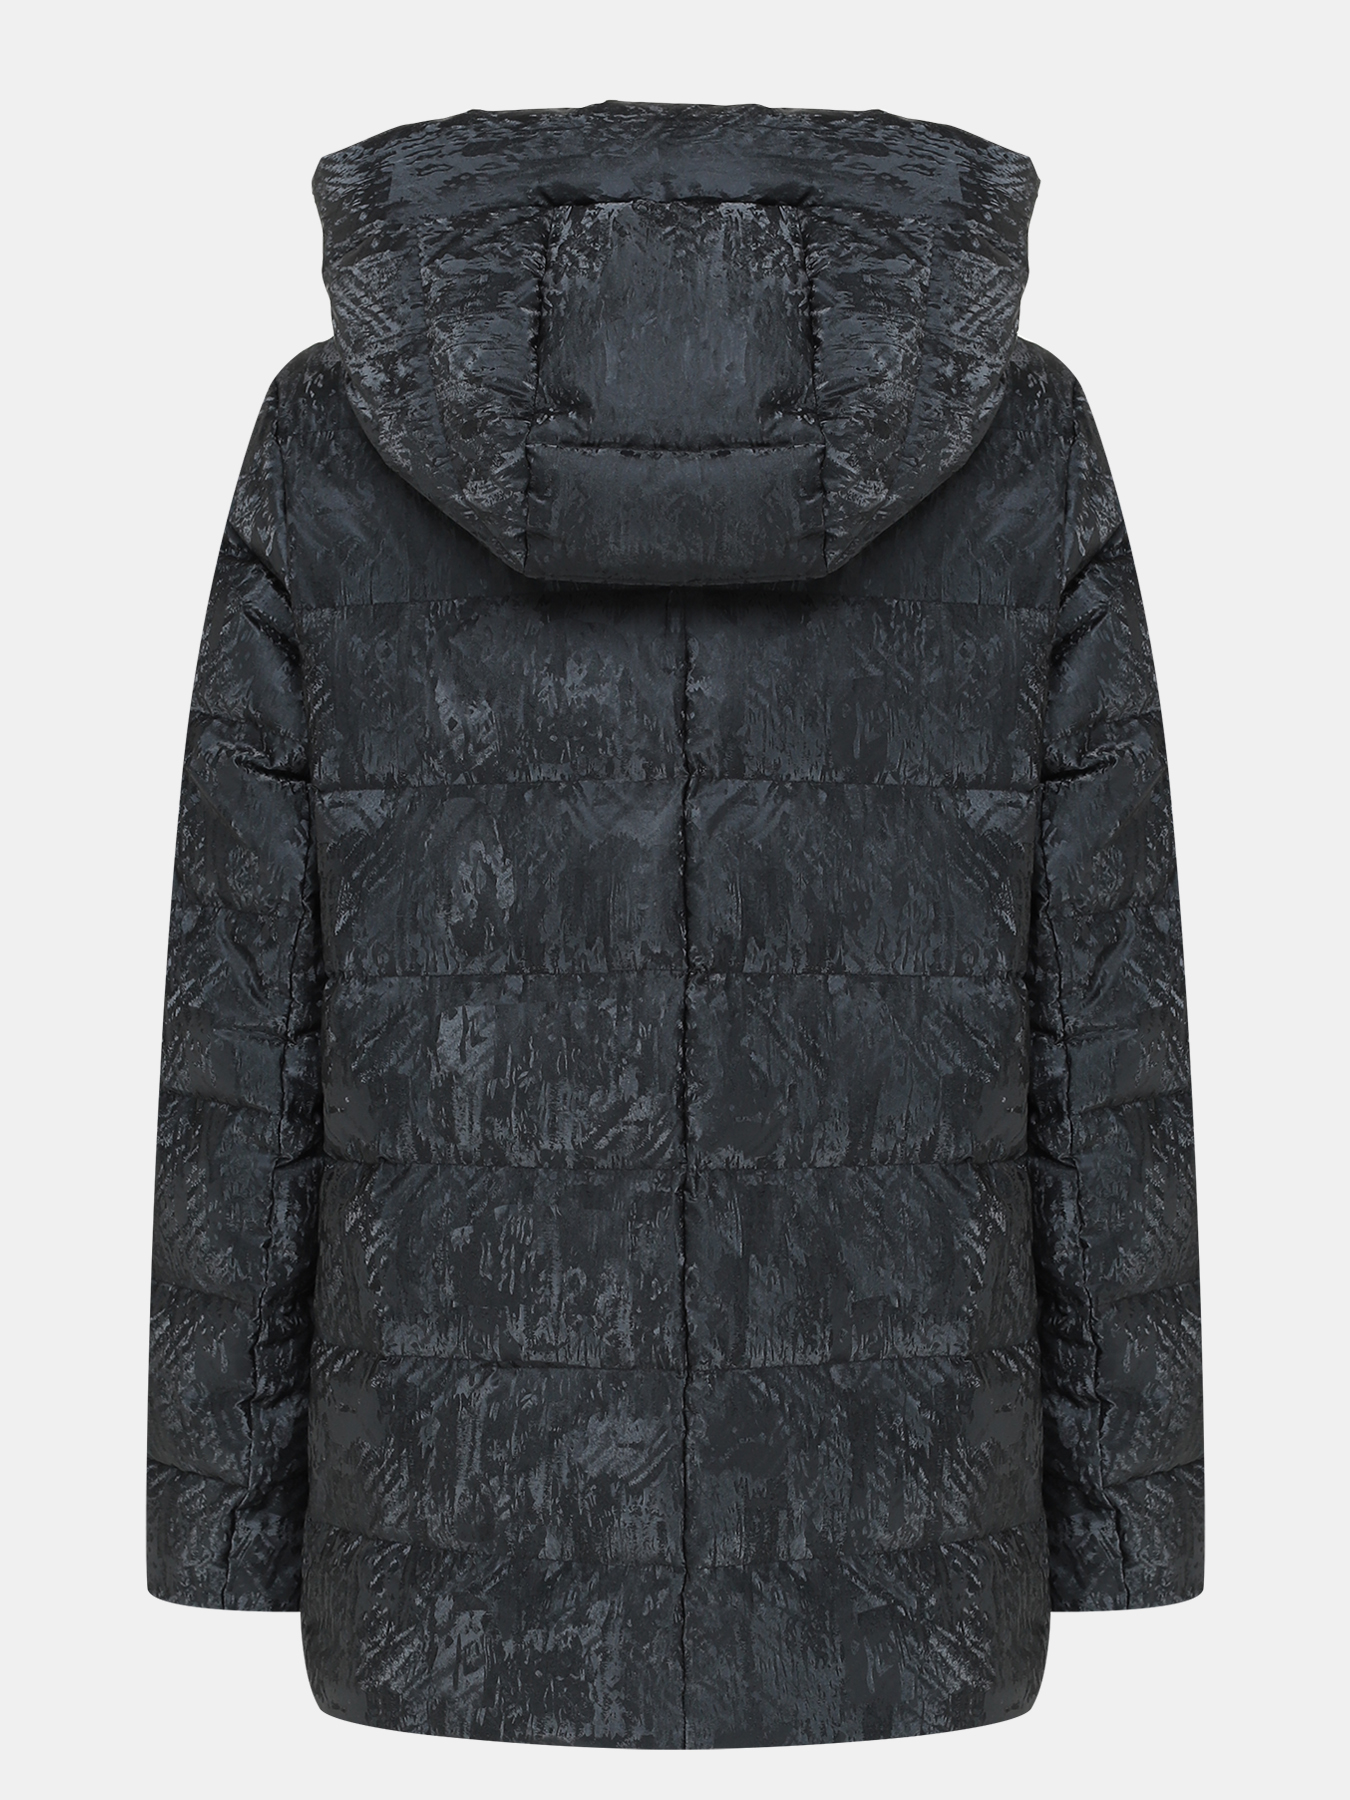 Куртка ORSA Couture 383919-024, цвет мультиколор, размер 48 - фото 2